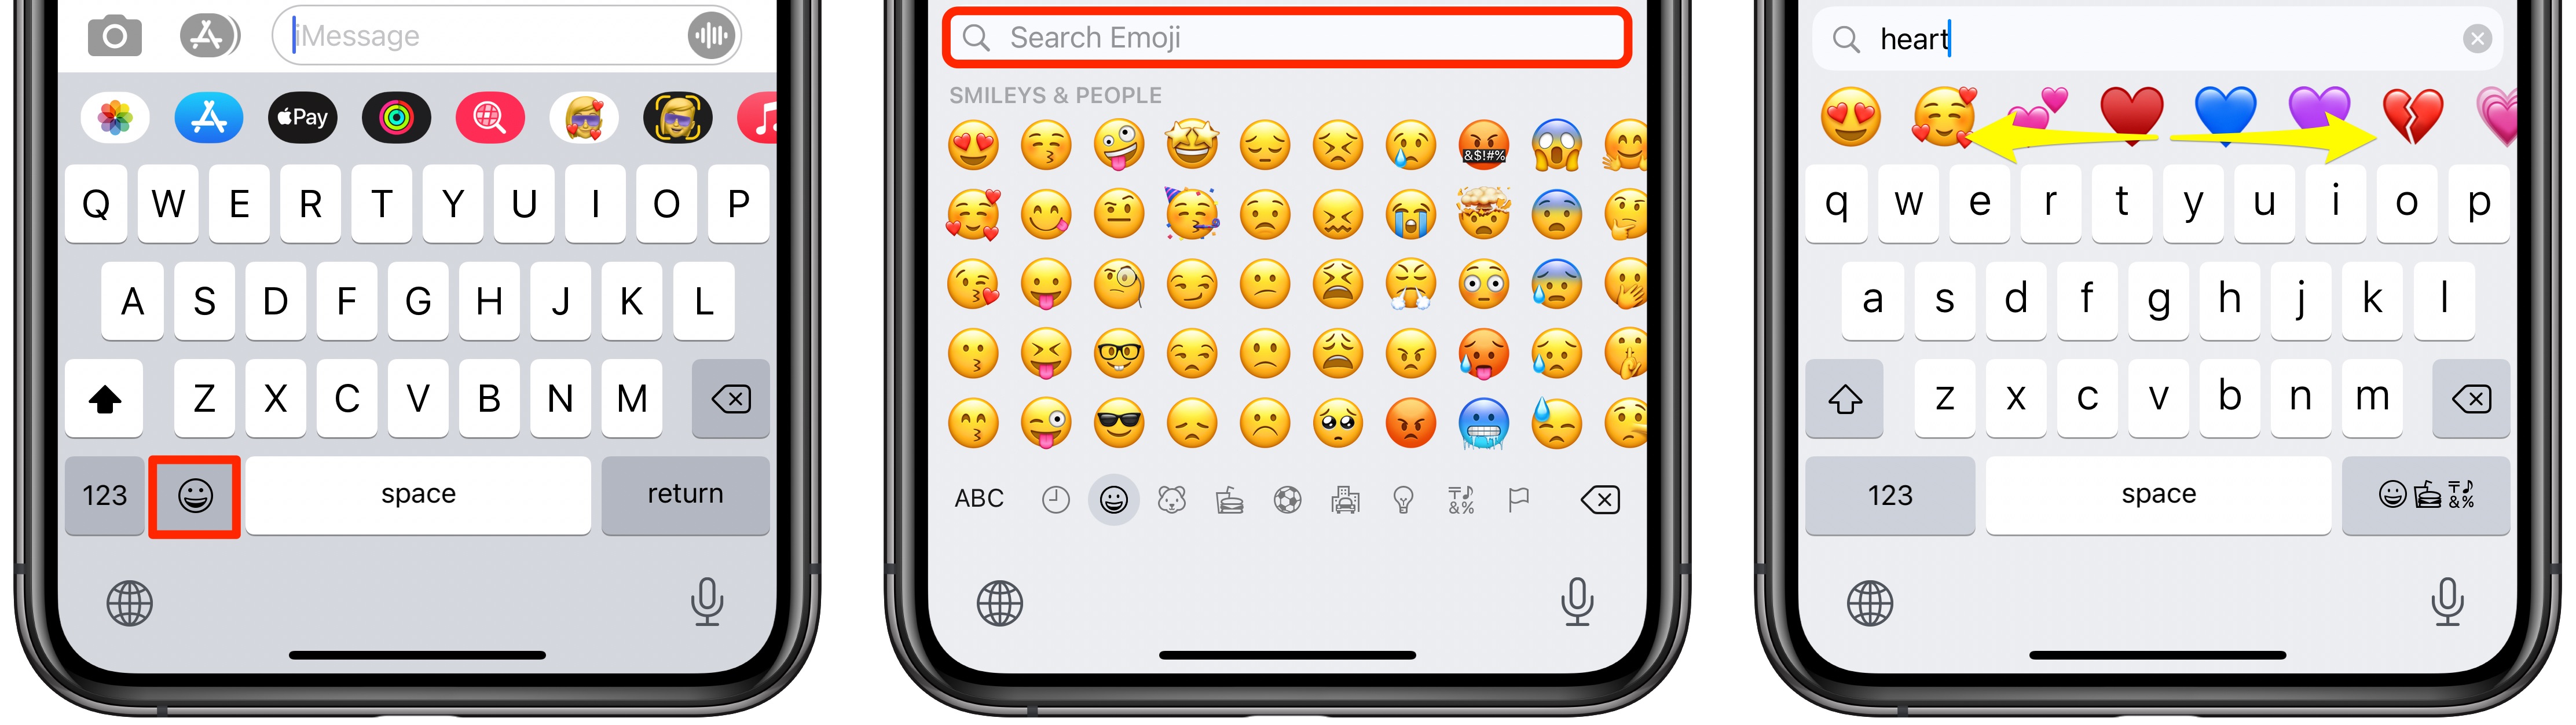 iPhone emoji search - example screenshot 1